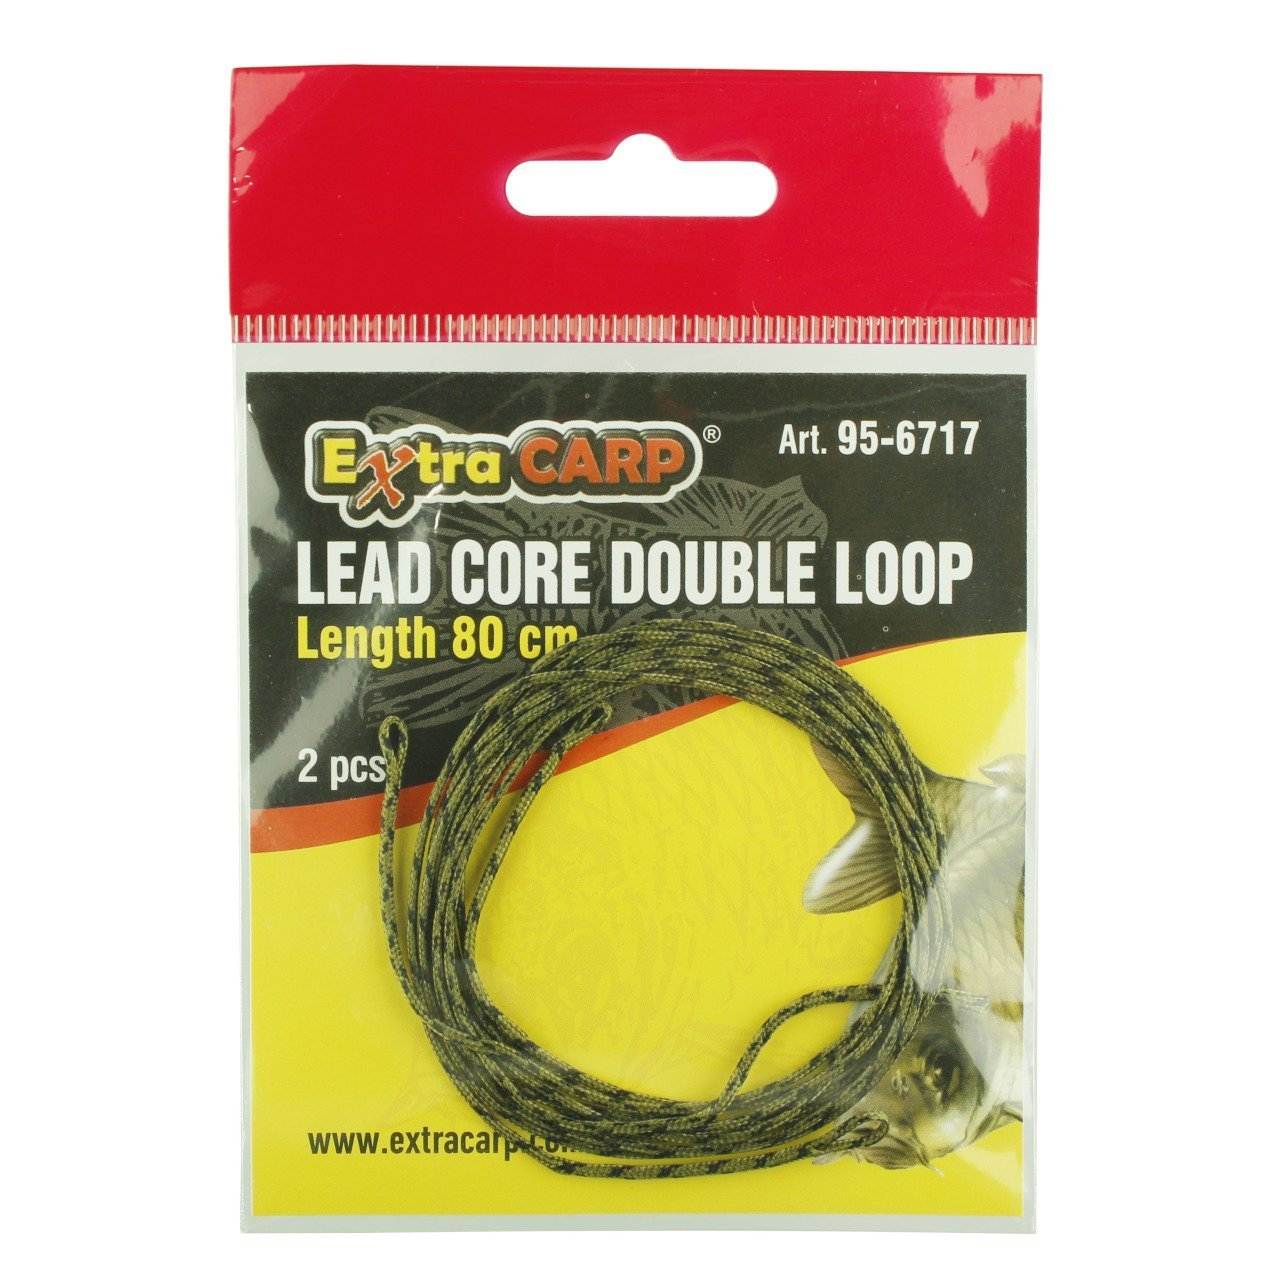 Extra Carp Lead Core Double Loop 2 Pcs